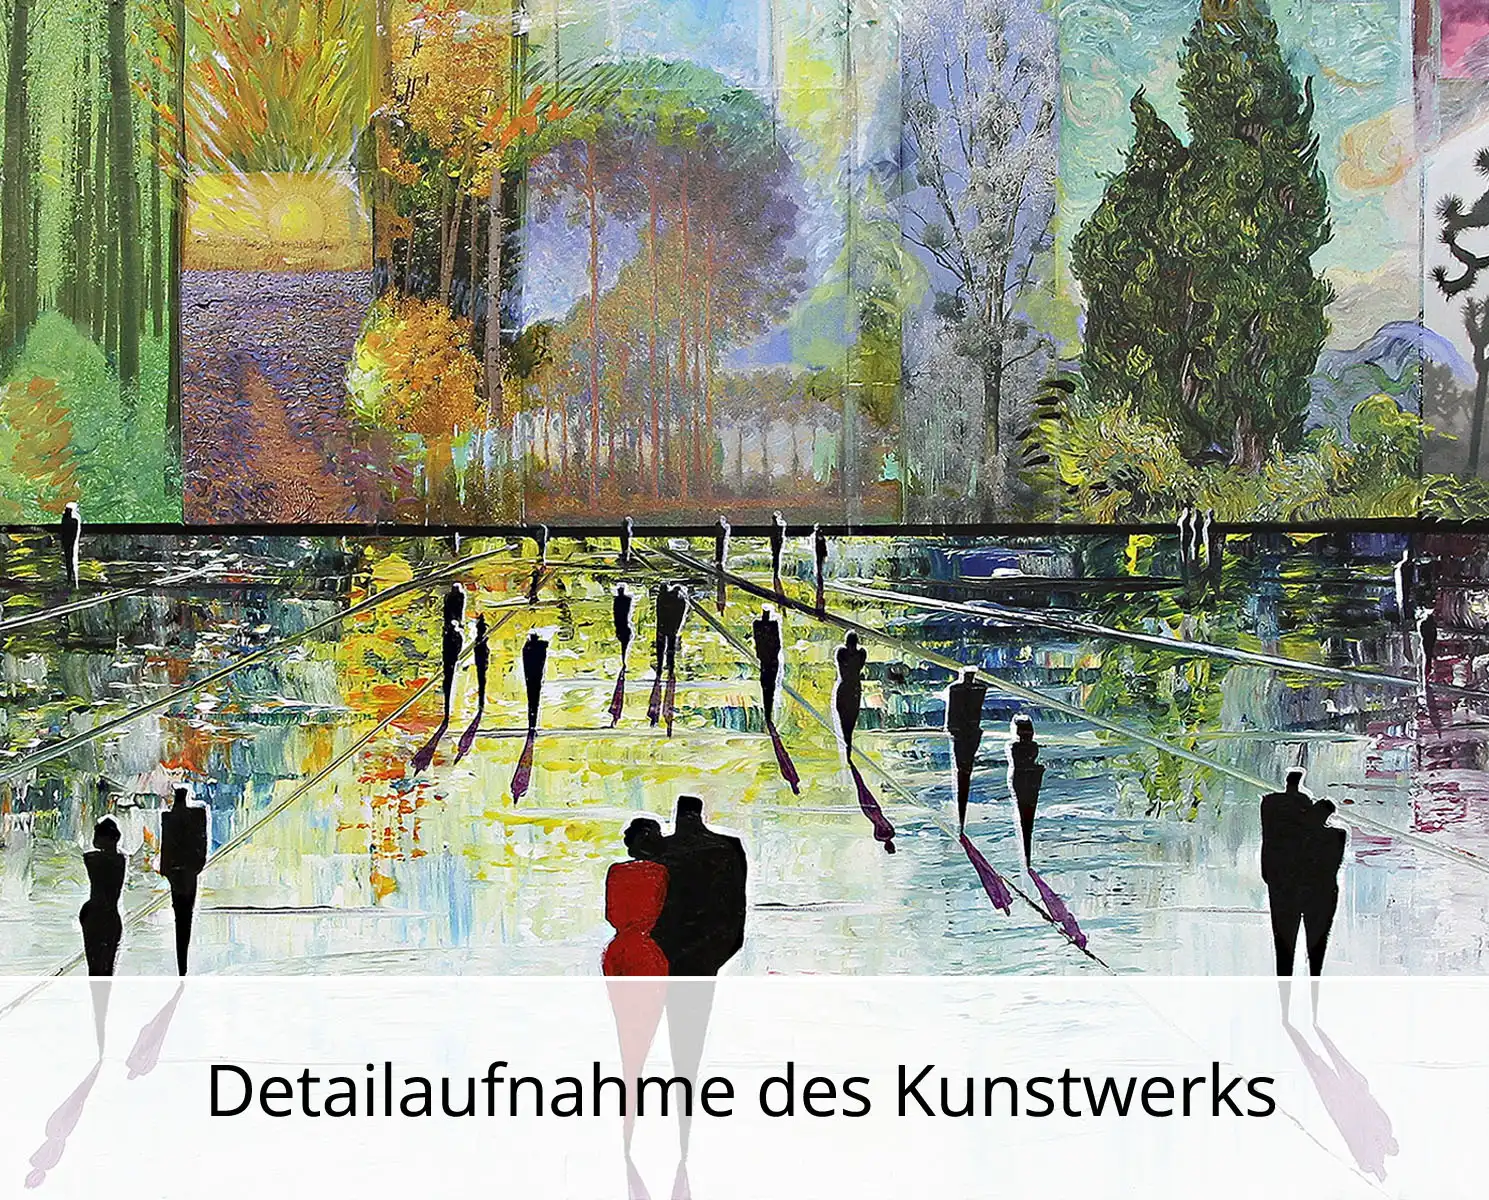 Kunstdruck, signiert: "Naturstadt VI", K. Namazi, Edition, Nr. 1/100